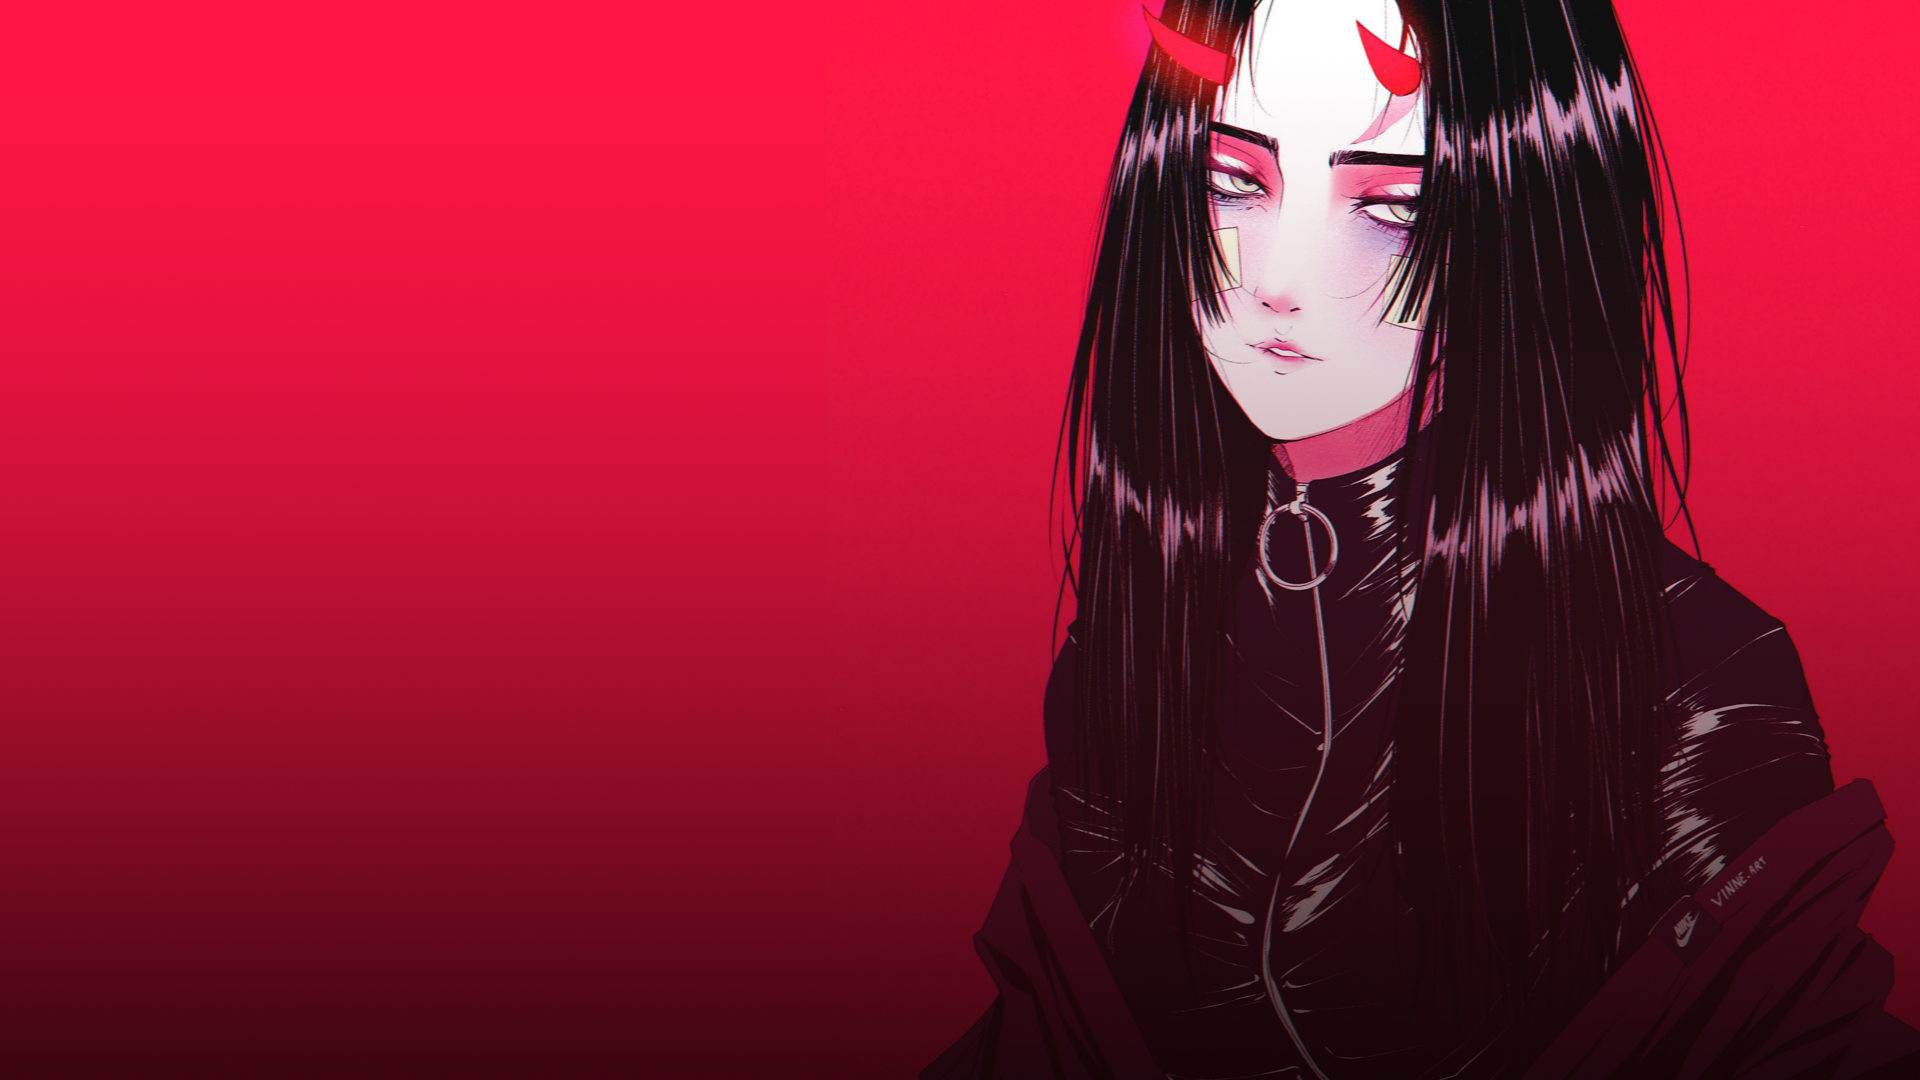 Drawn Women Demon Horns Horns Black Hair Long Hair Red Digital Art Demon Girl Oni 1920x1080